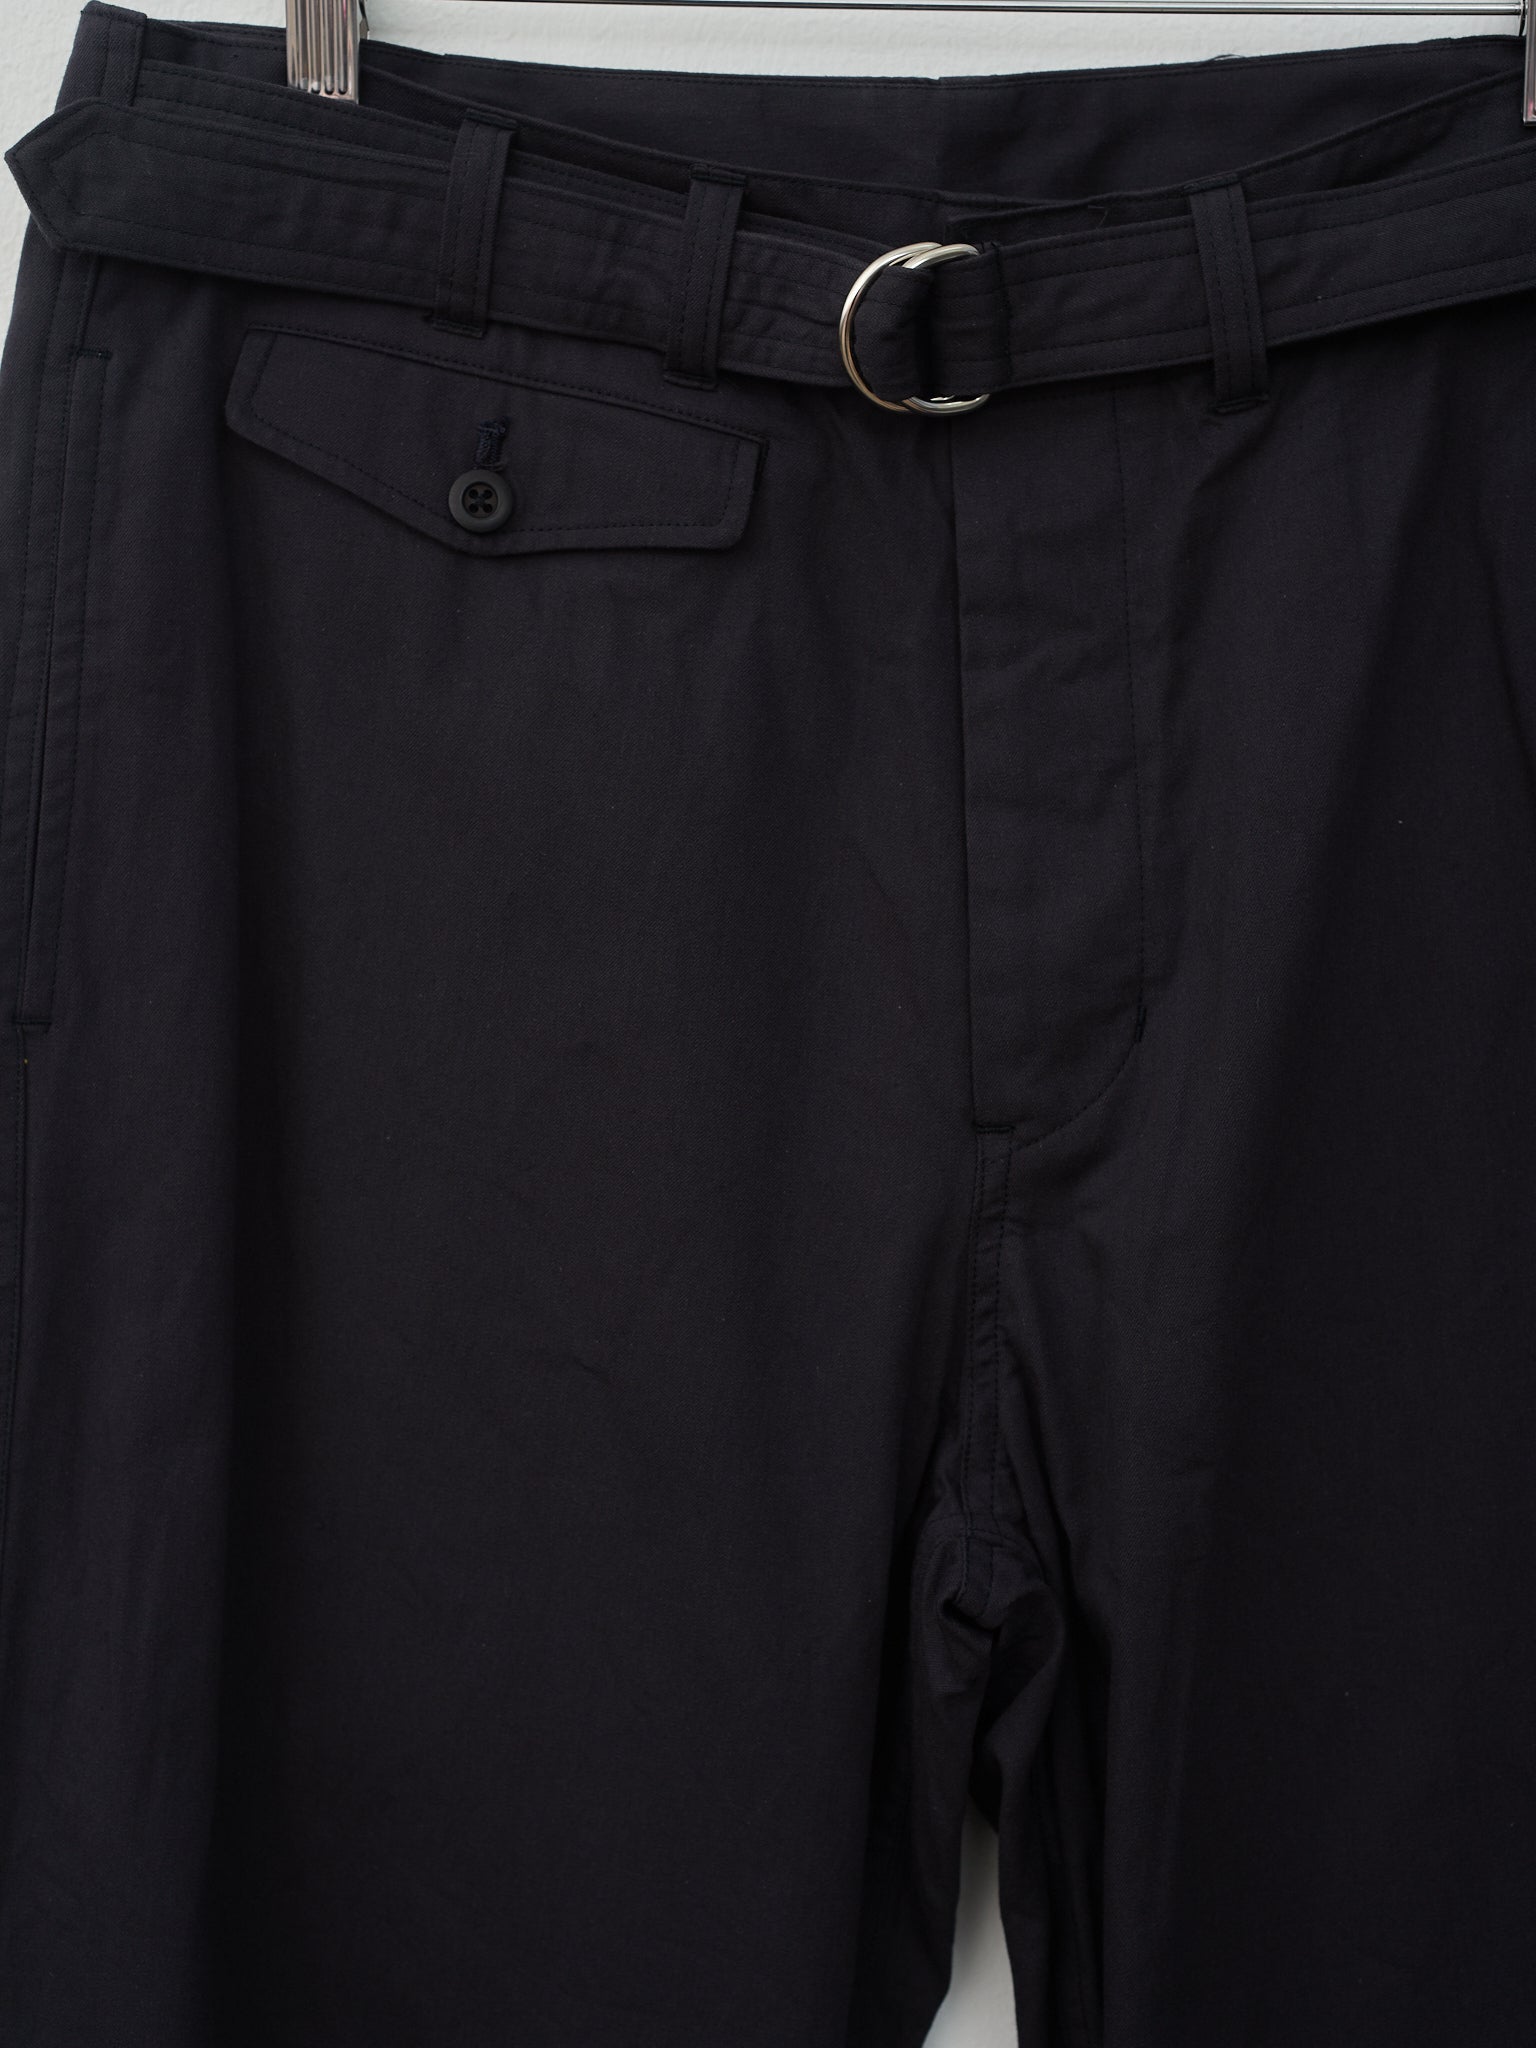 Namu Shop - ts(s) Cotton Slub D-Ring Belted Pants - Dark Navy